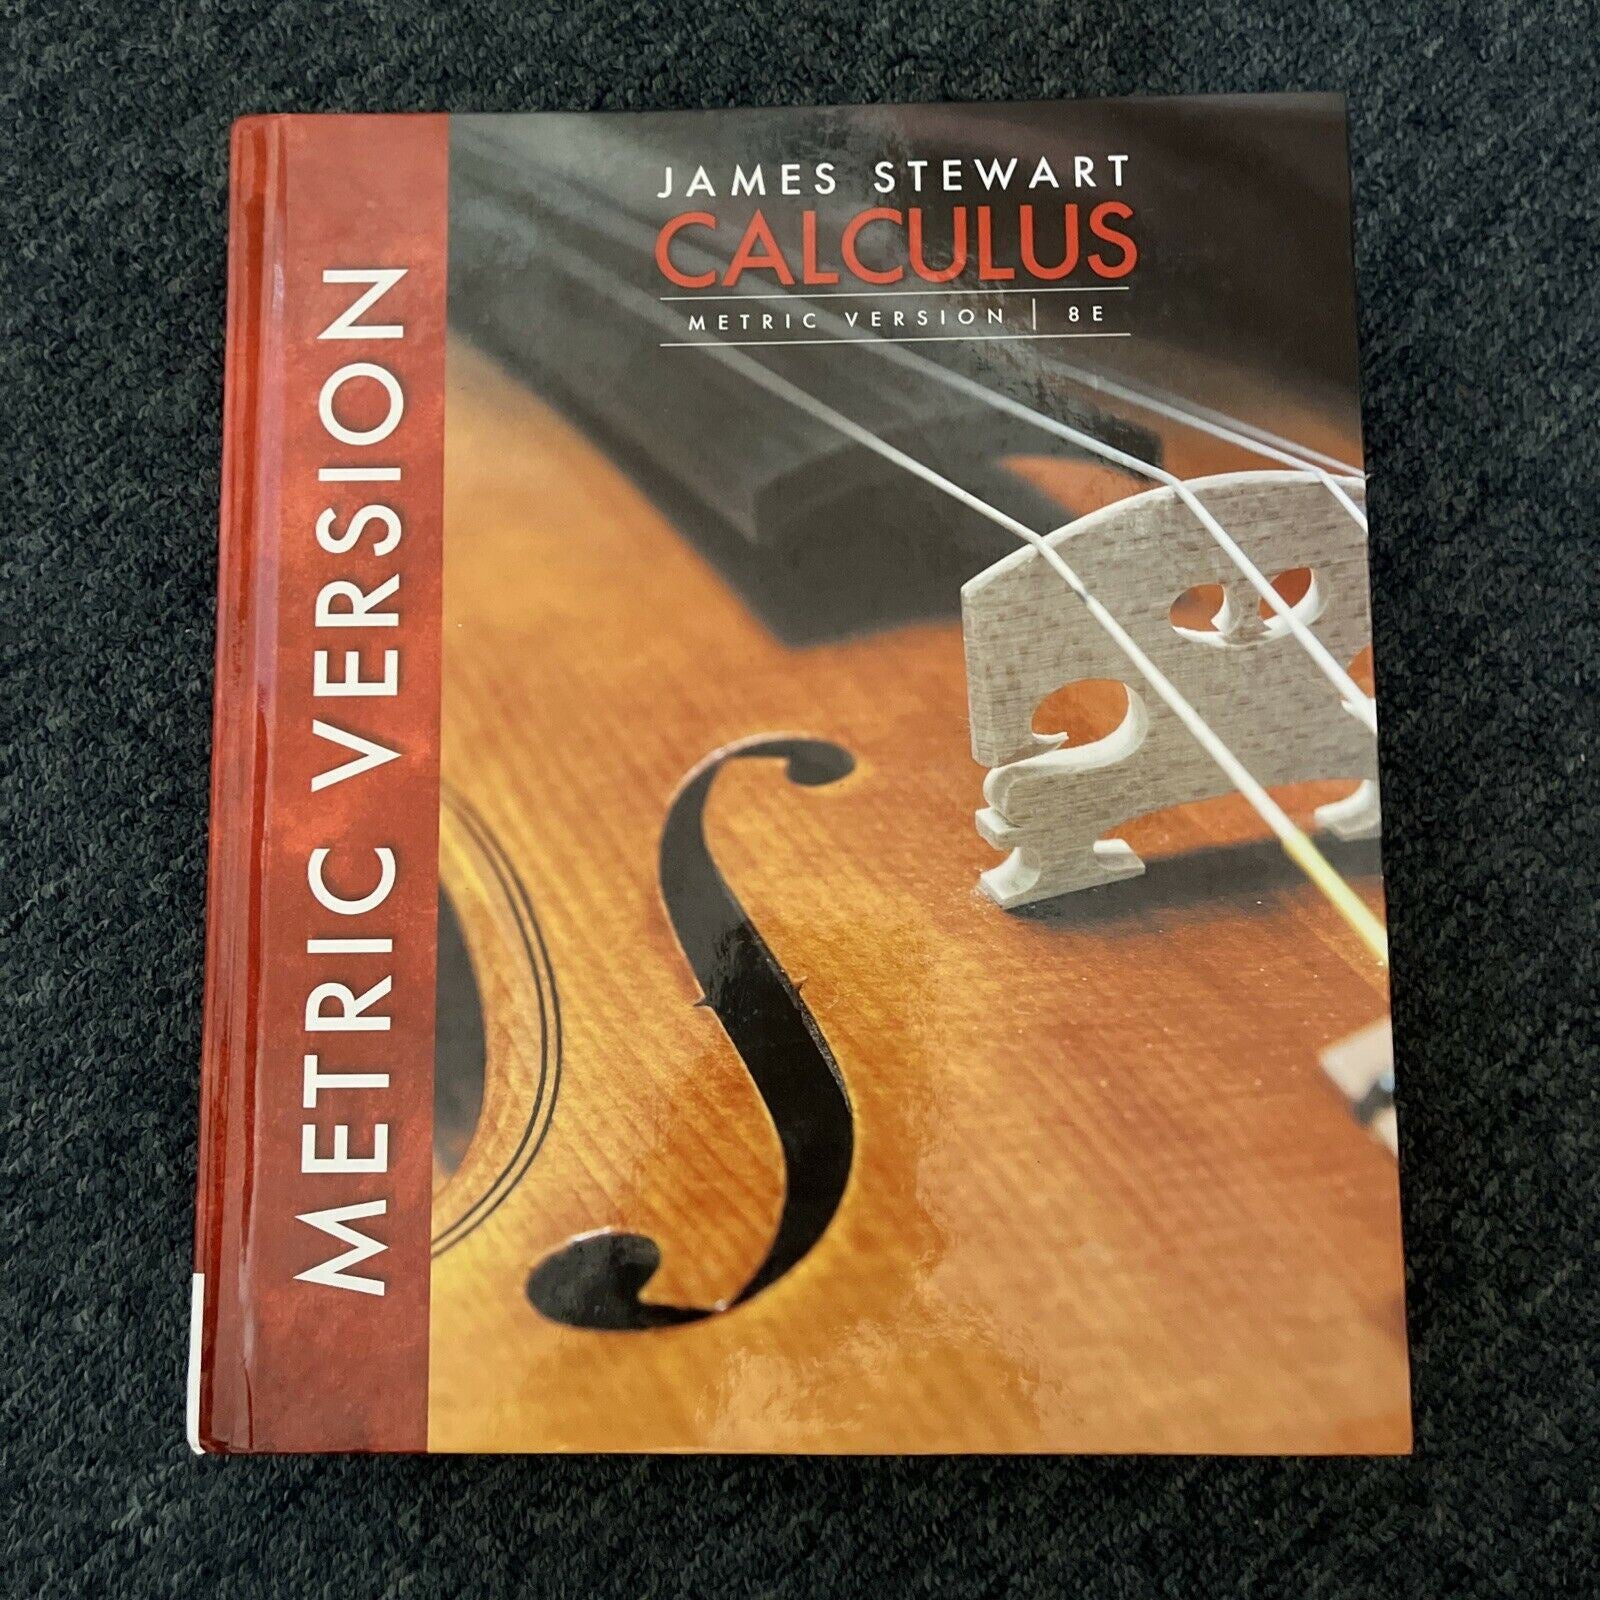 Calculus International Metric Edition 8e By James Stewart Hardcover Retro Unit 2822